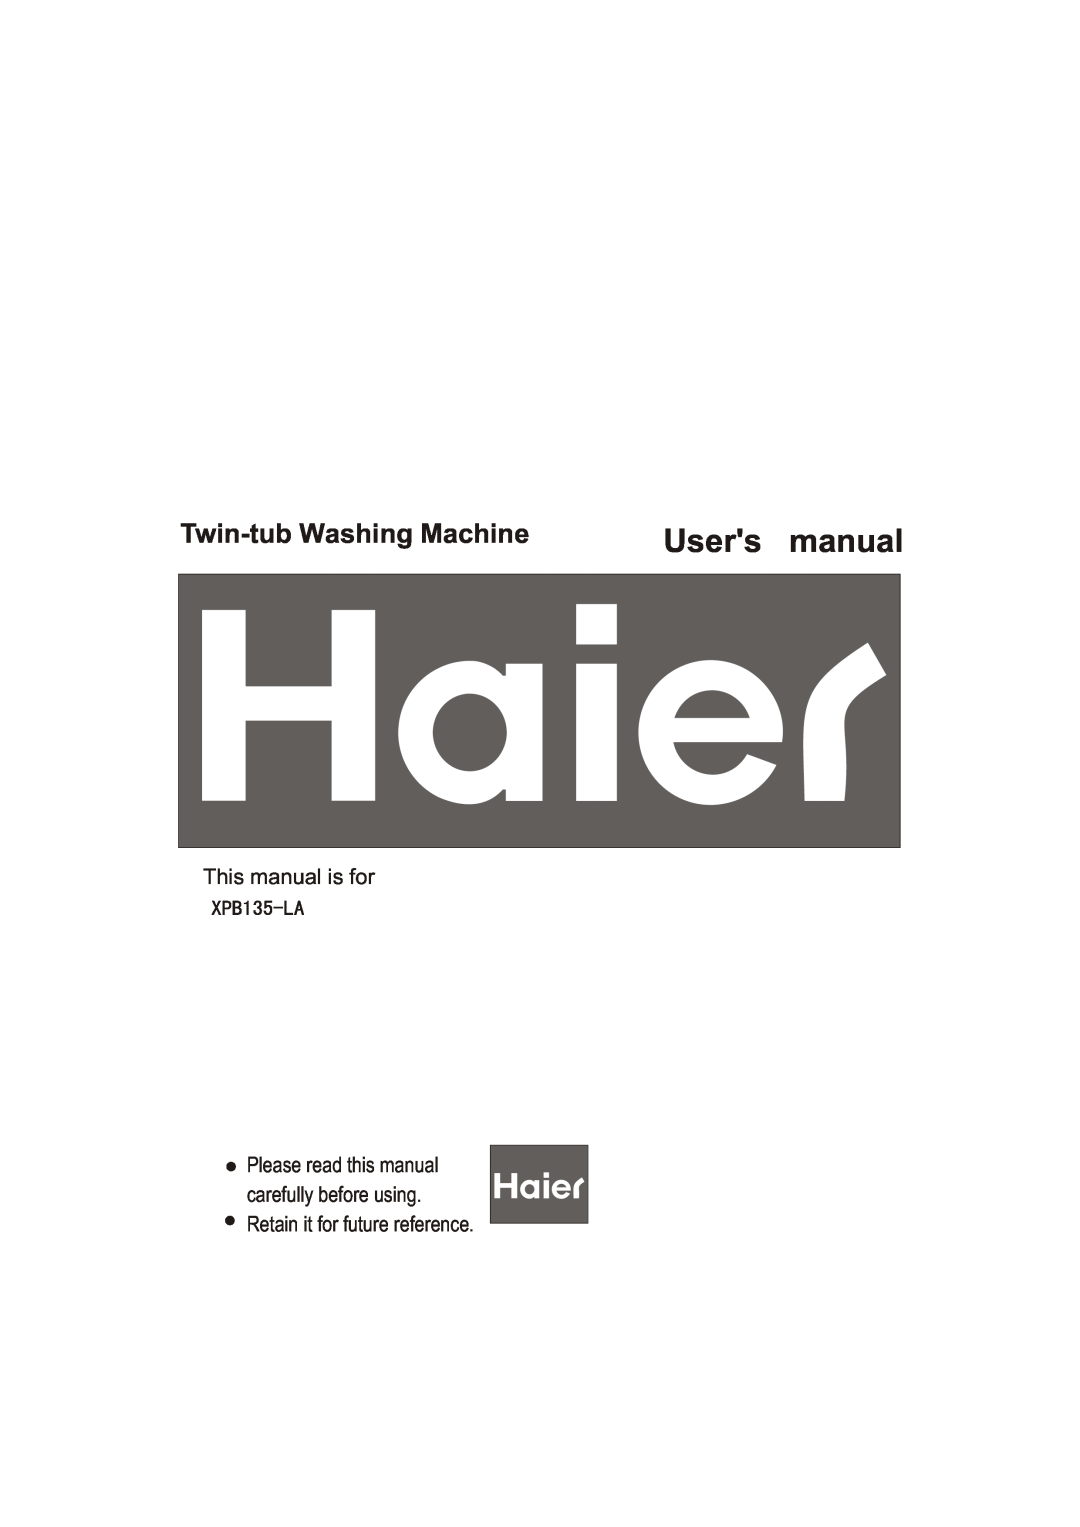 Haier XPB135-LA user manual Users manual, This manual is for, Twin-tub Washing Machine 